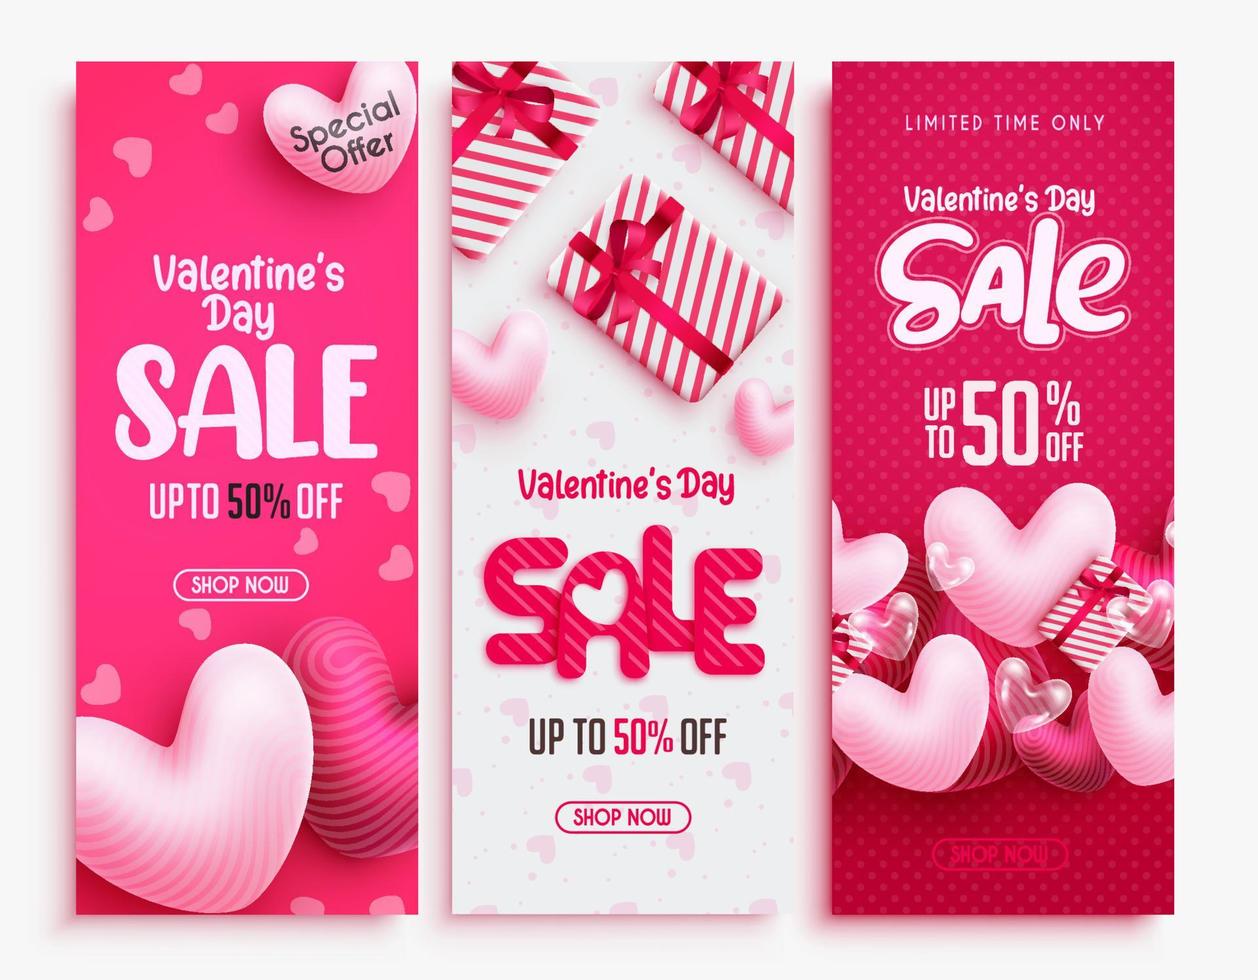 Valentine's sale vector banner set. Valentine's day discount text with heart balloon elements